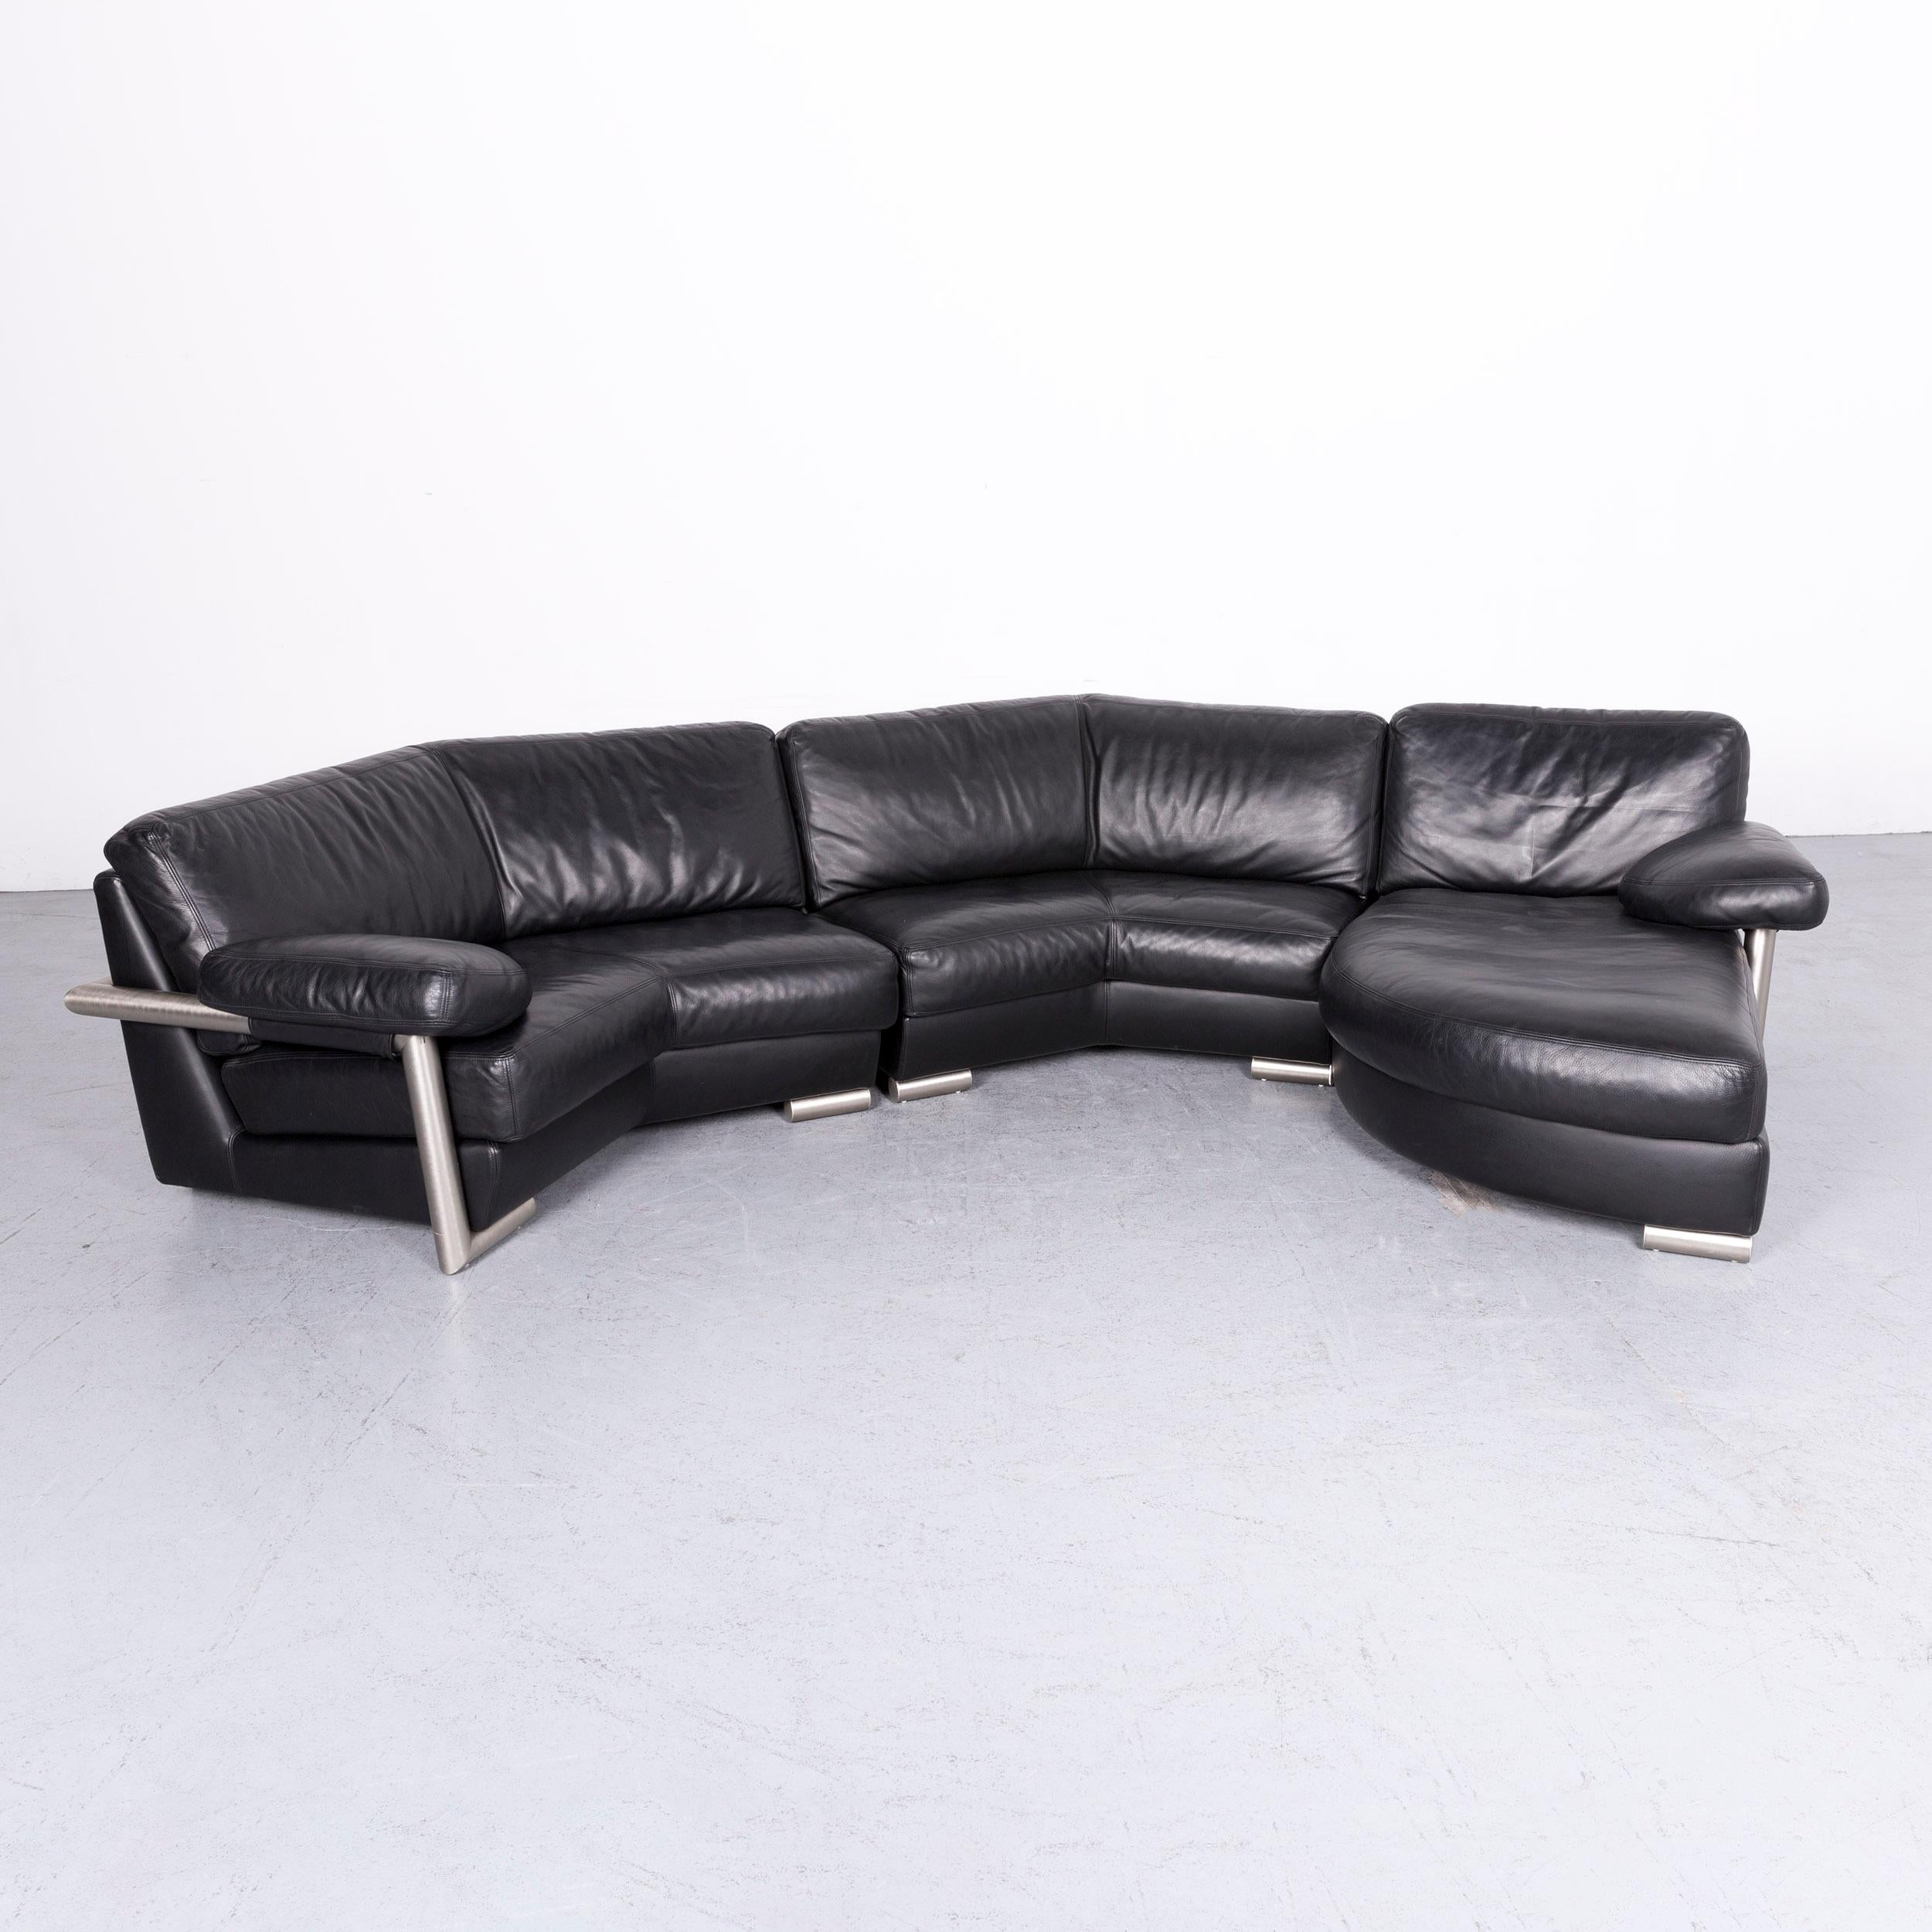 We bring to you an Artanova Medea designer black leather corner sofa.